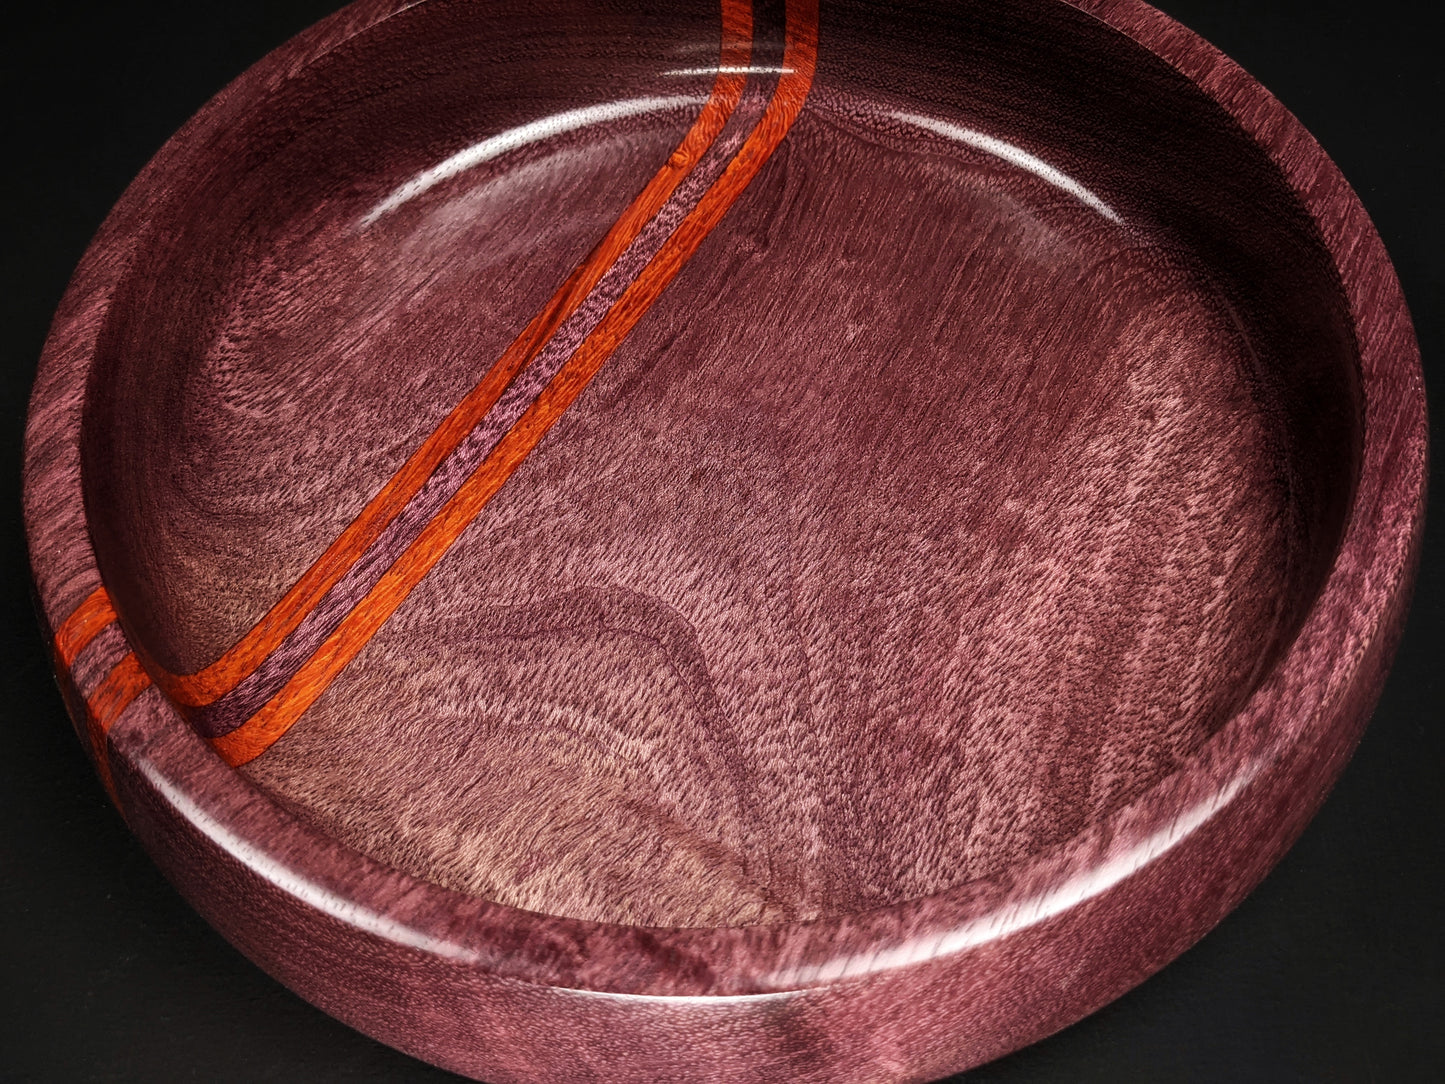 Purpleheart bowl with a padauk racing stripe